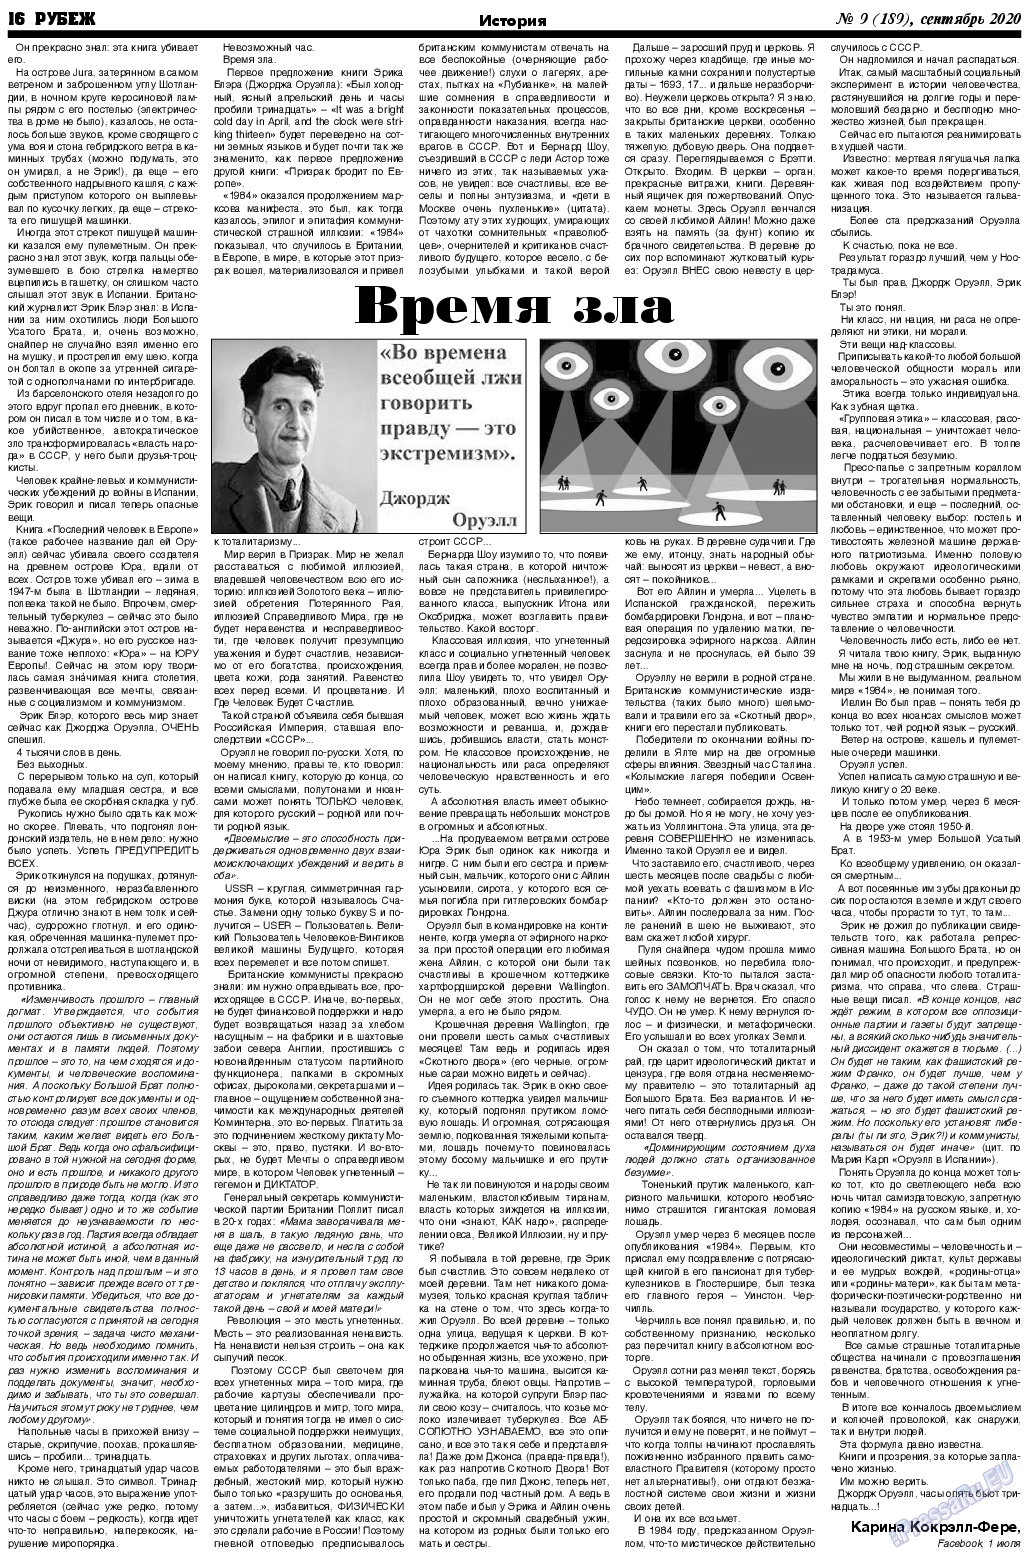 Рубеж, газета. 2020 №9 стр.16